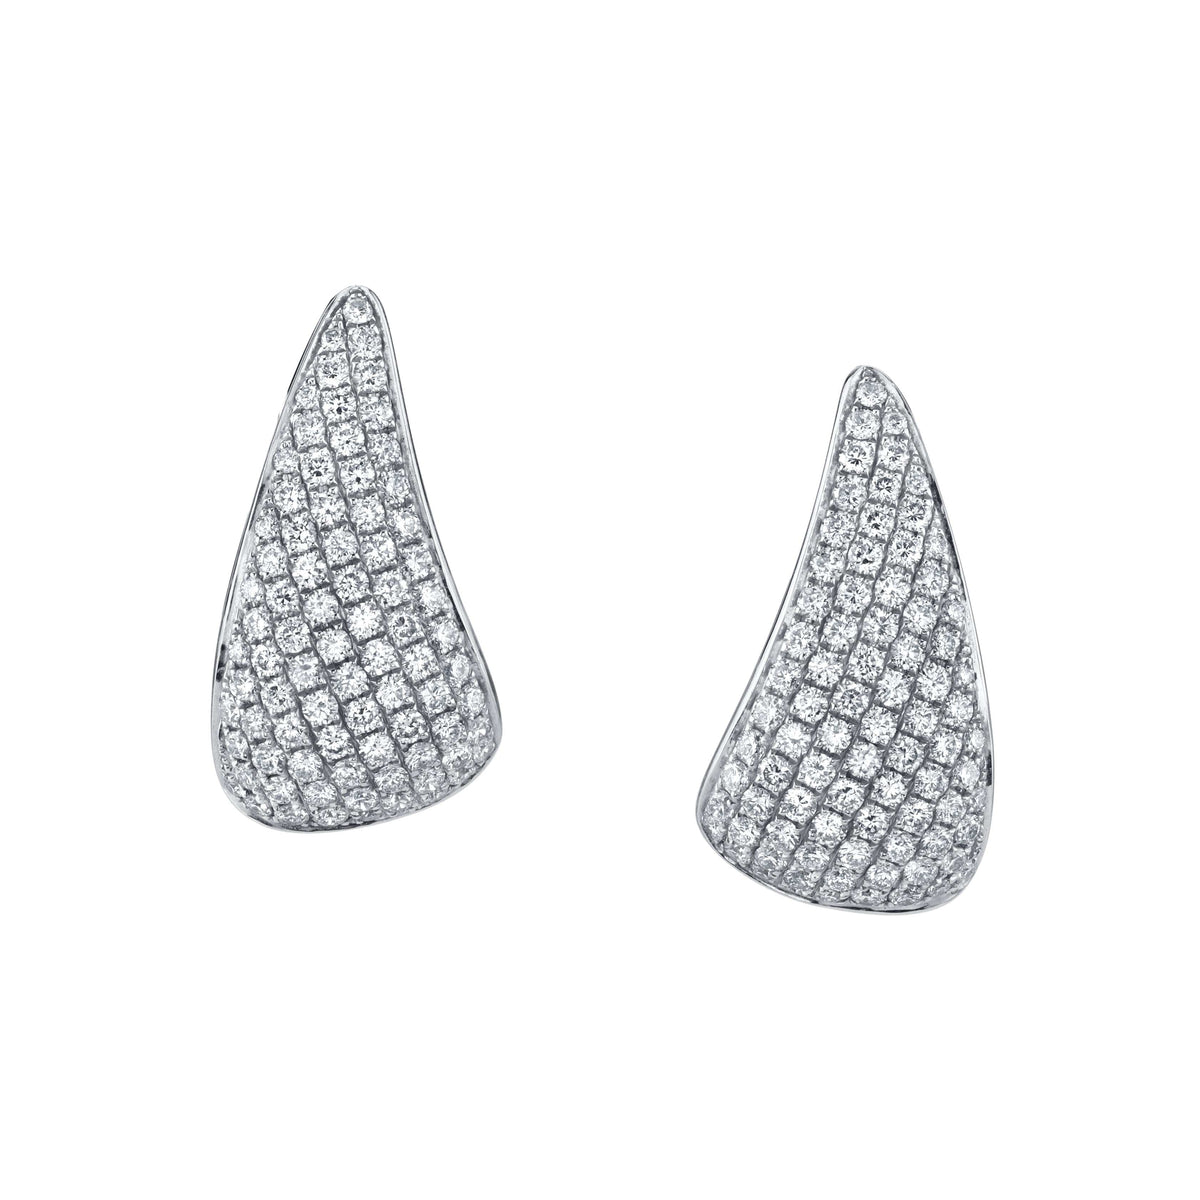 Anita Ko 18K White Gold Pave Diamond Claw Earrings